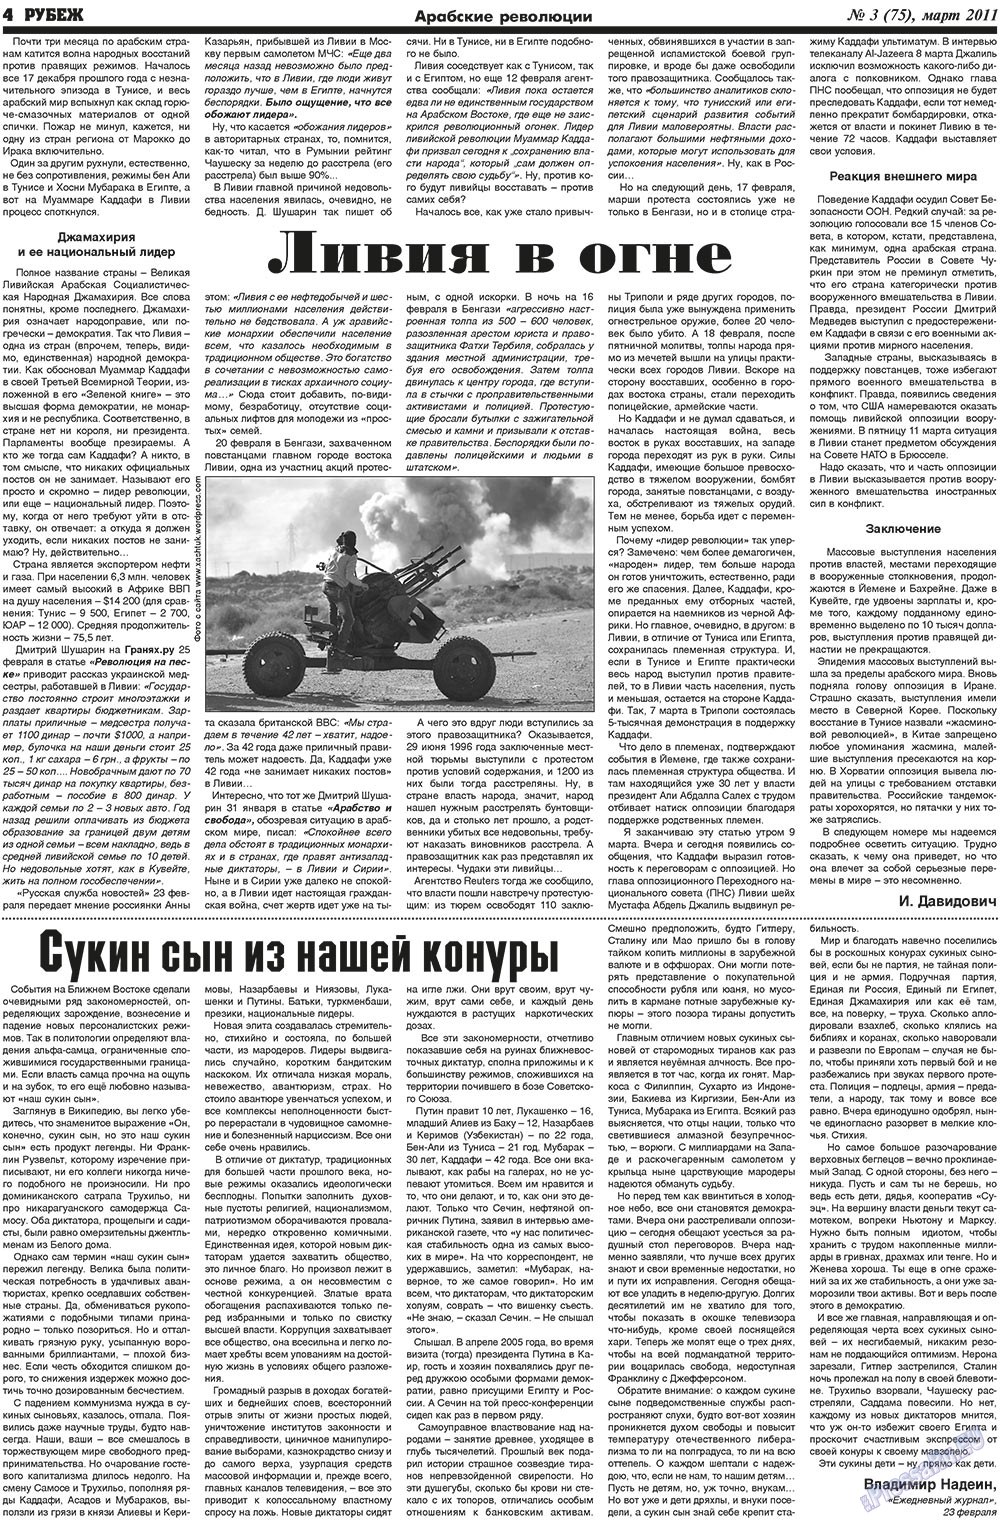 Рубеж, газета. 2011 №3 стр.4